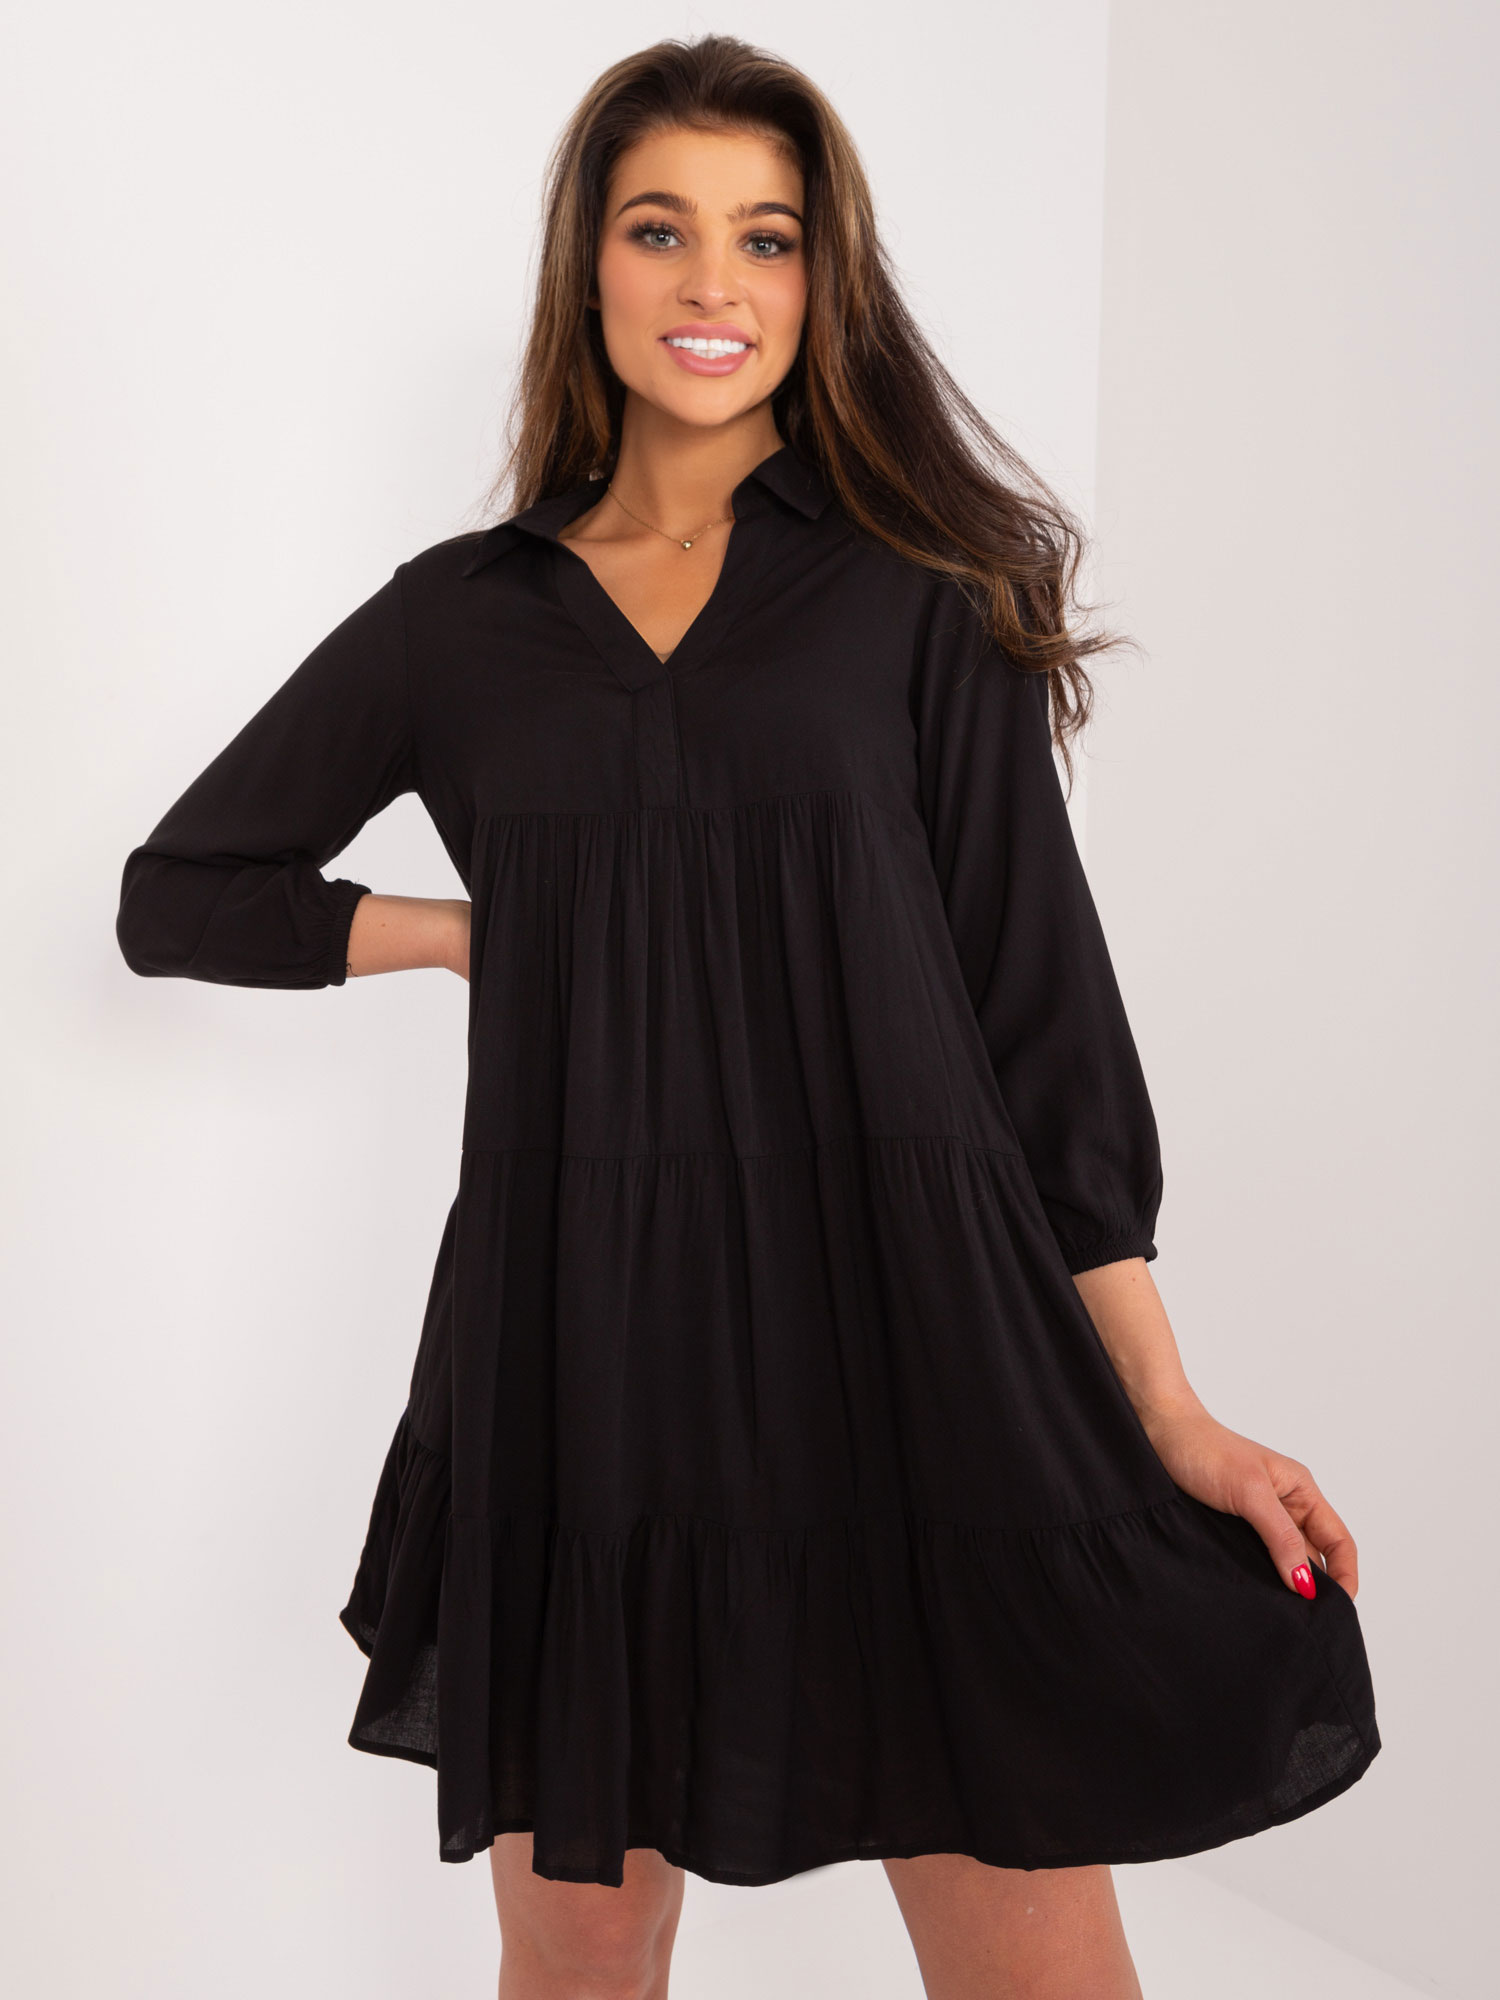 Black viscose dress with ruffles SUBLEVEL